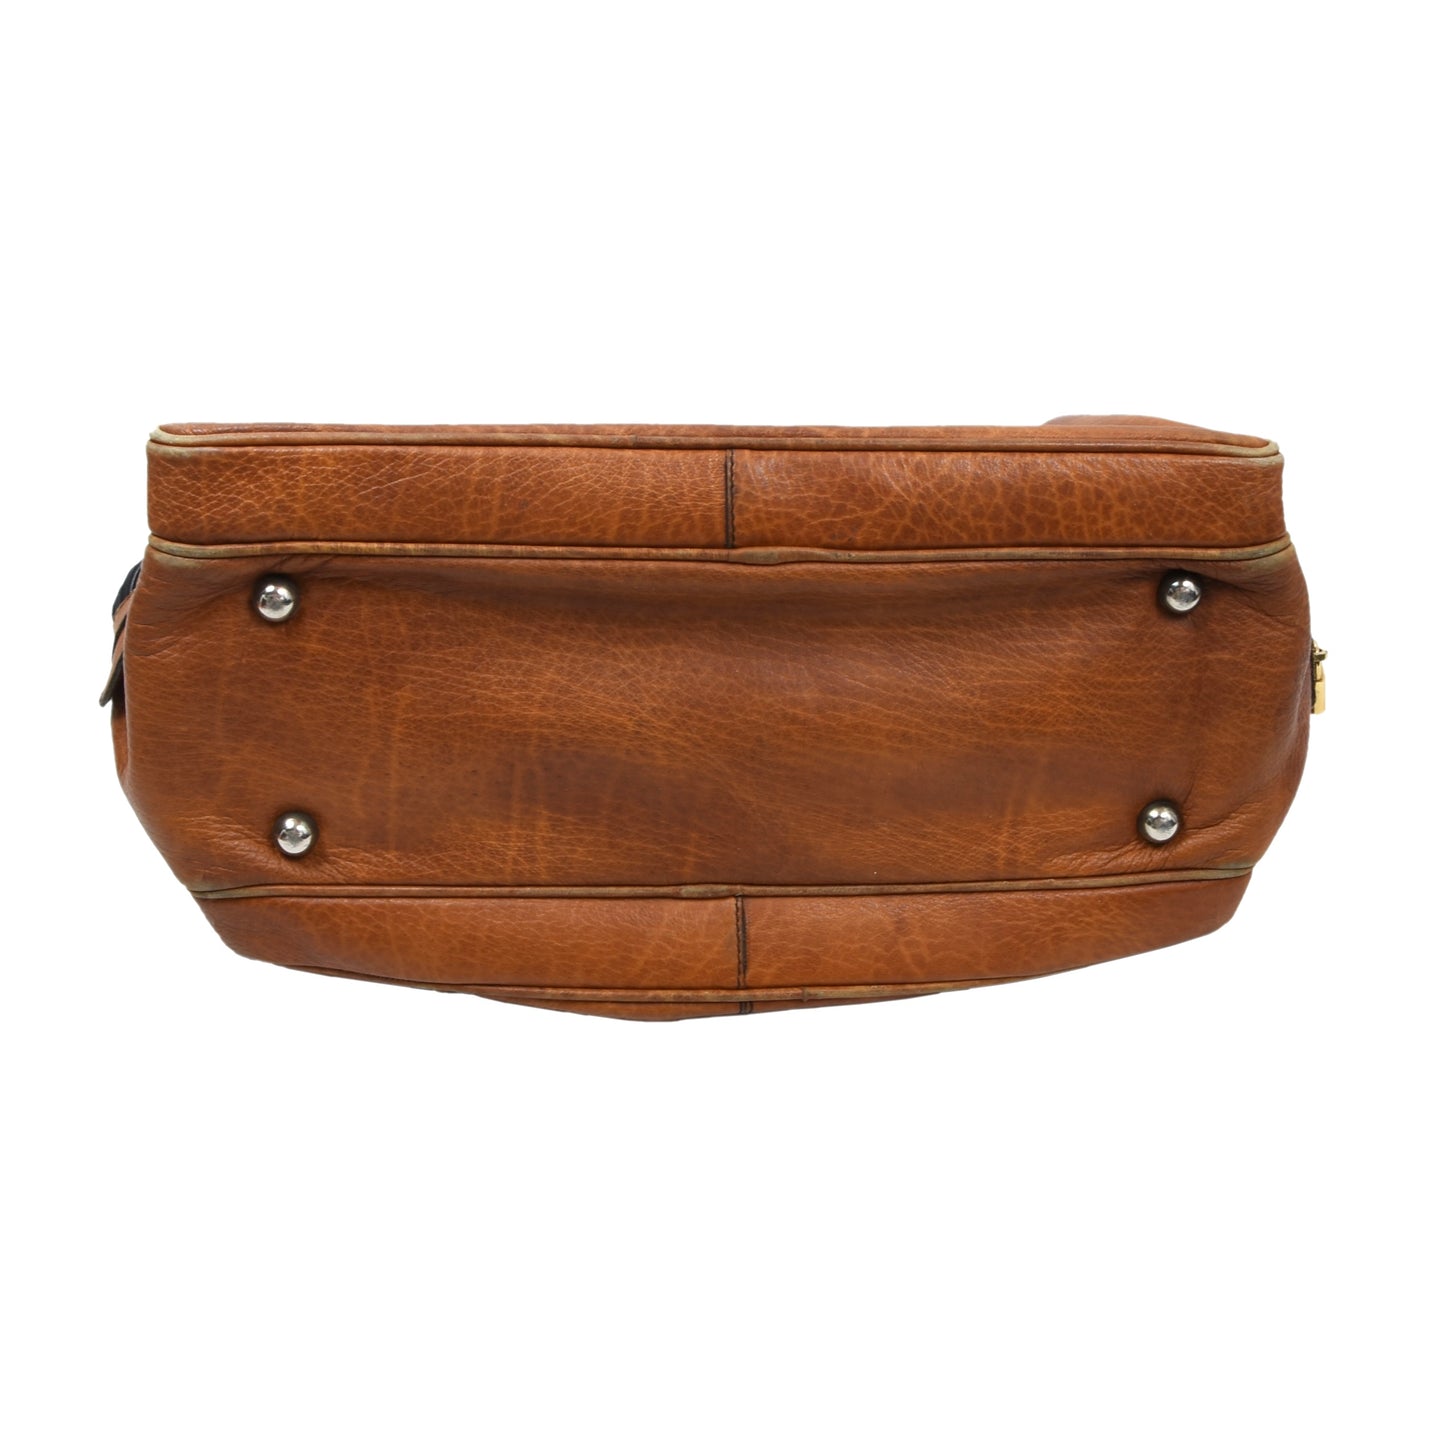 Goldpfeil Caracciola Leather Weekender/Duffle Bag - Tan/Brown